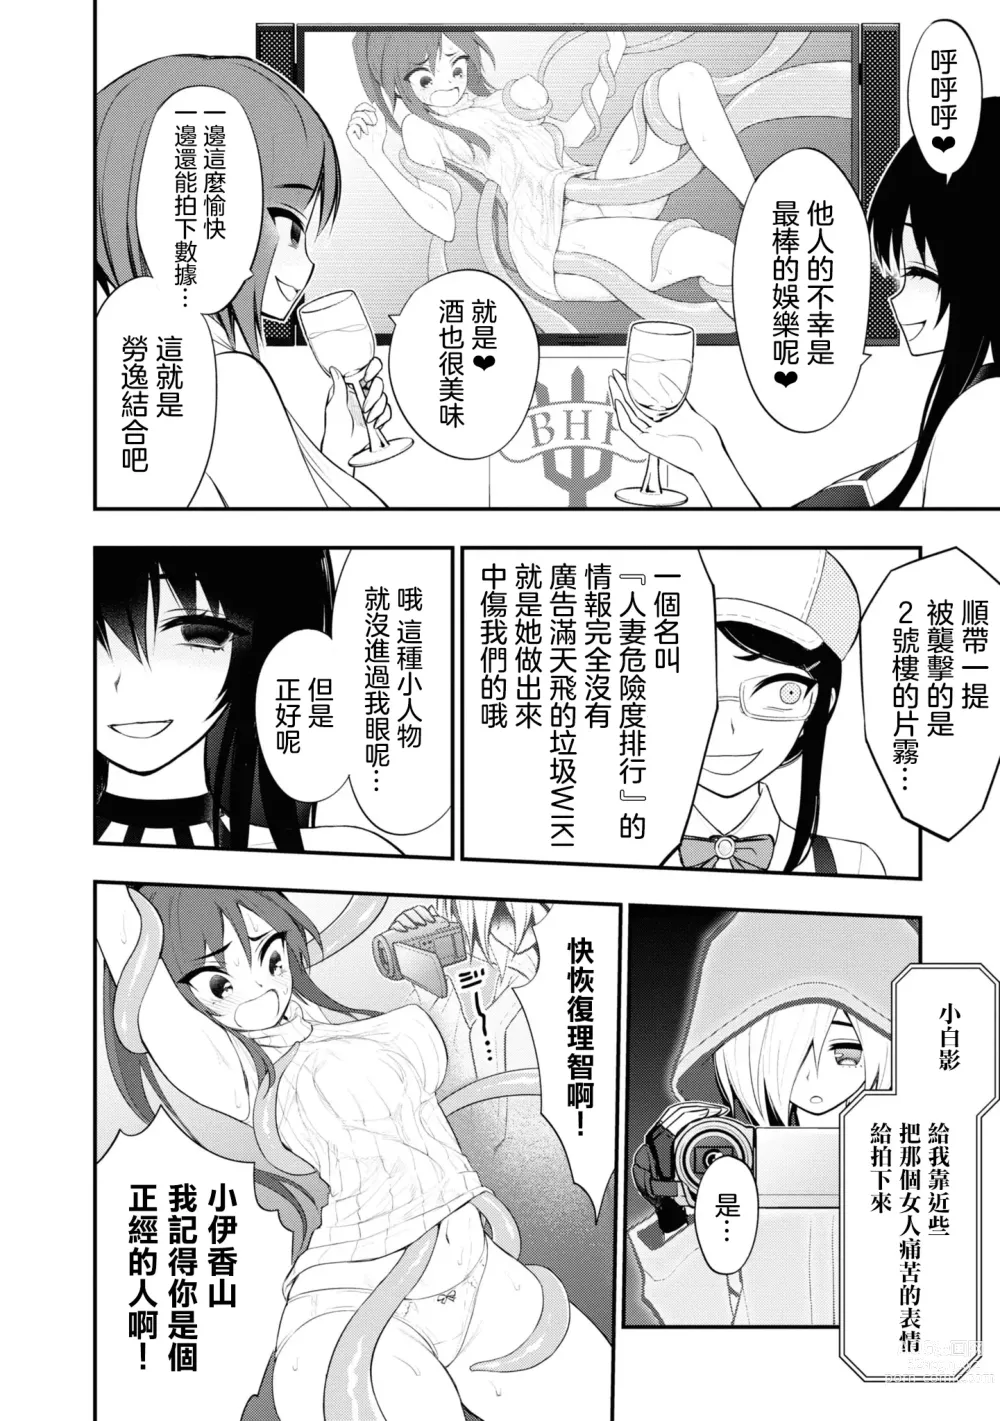 Page 140 of manga 淫獄小區 VOL.2